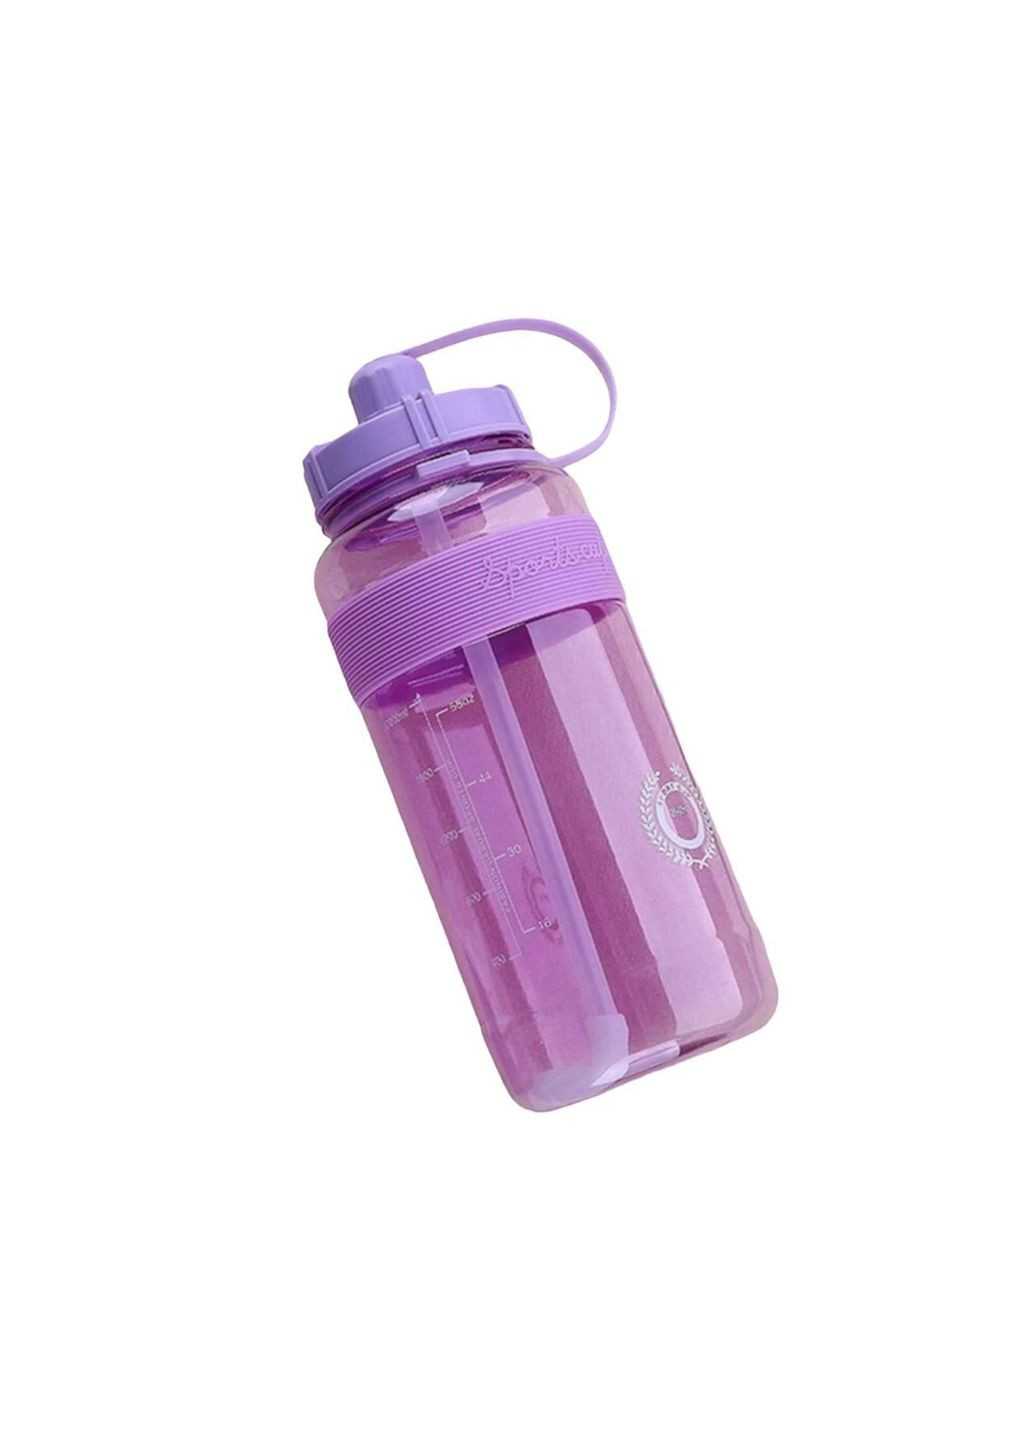 Спортивная уличная бутылка для воды 1500 мл. Фиолетовая No Brand (270856080)